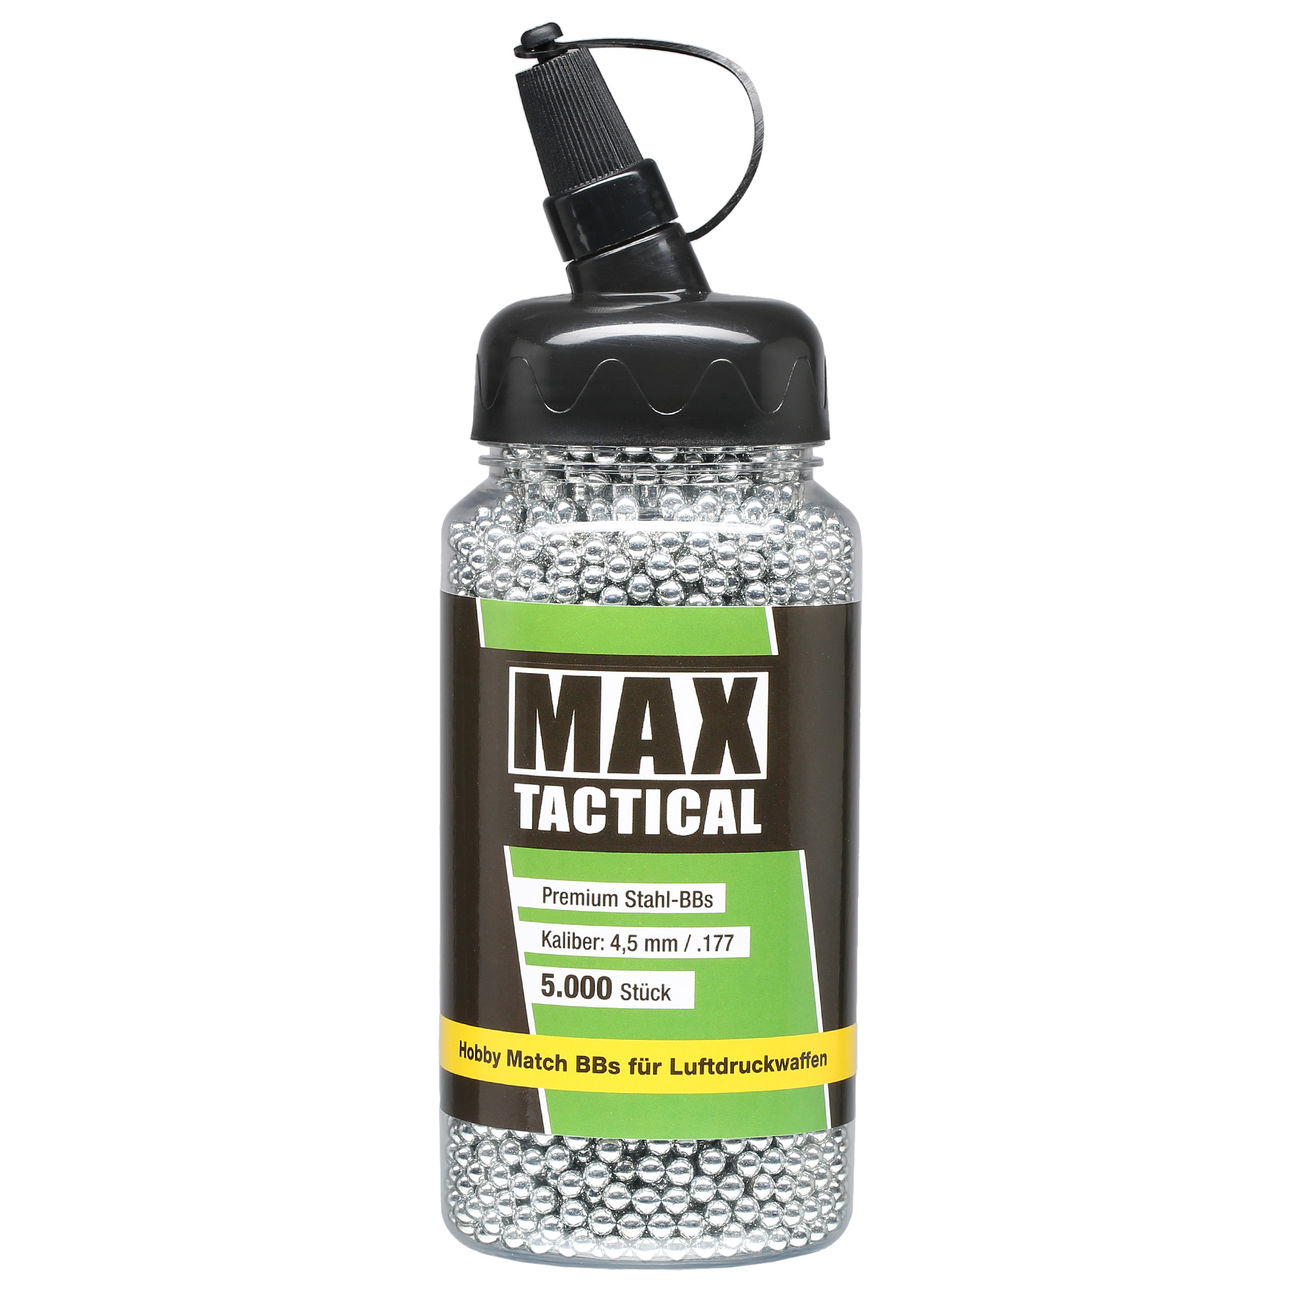   Max Tactical Premium Stahl-BBs Kal. 4,5 mm 5000er Schnelllader